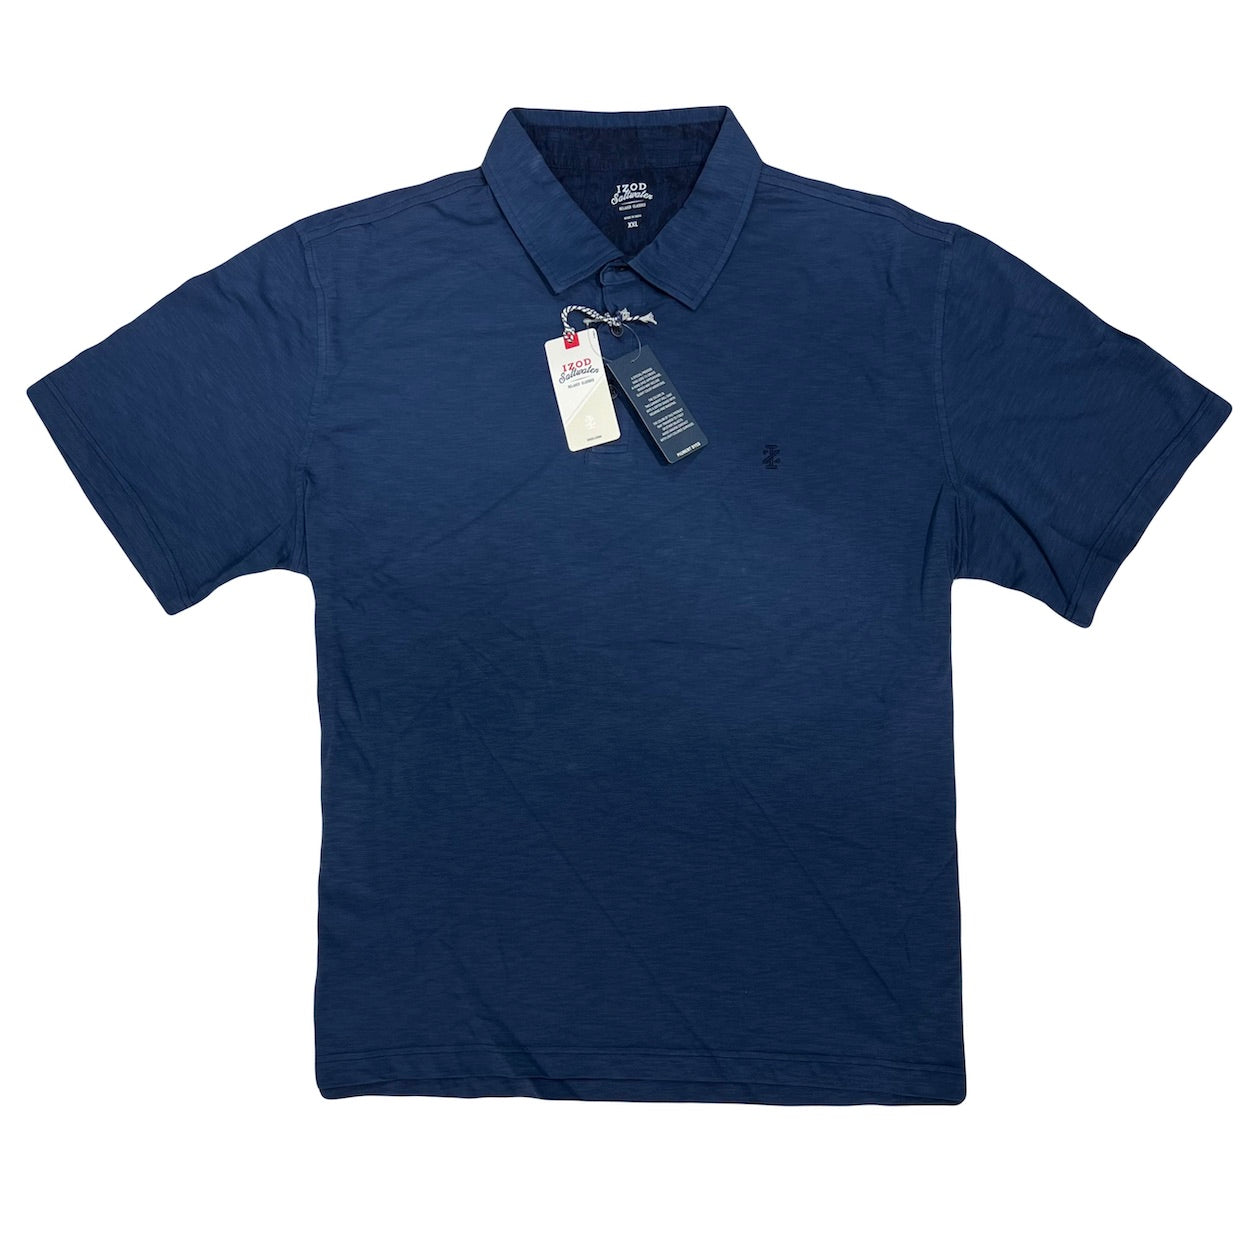 Shop Men's Blue Half Sleeve Shirts